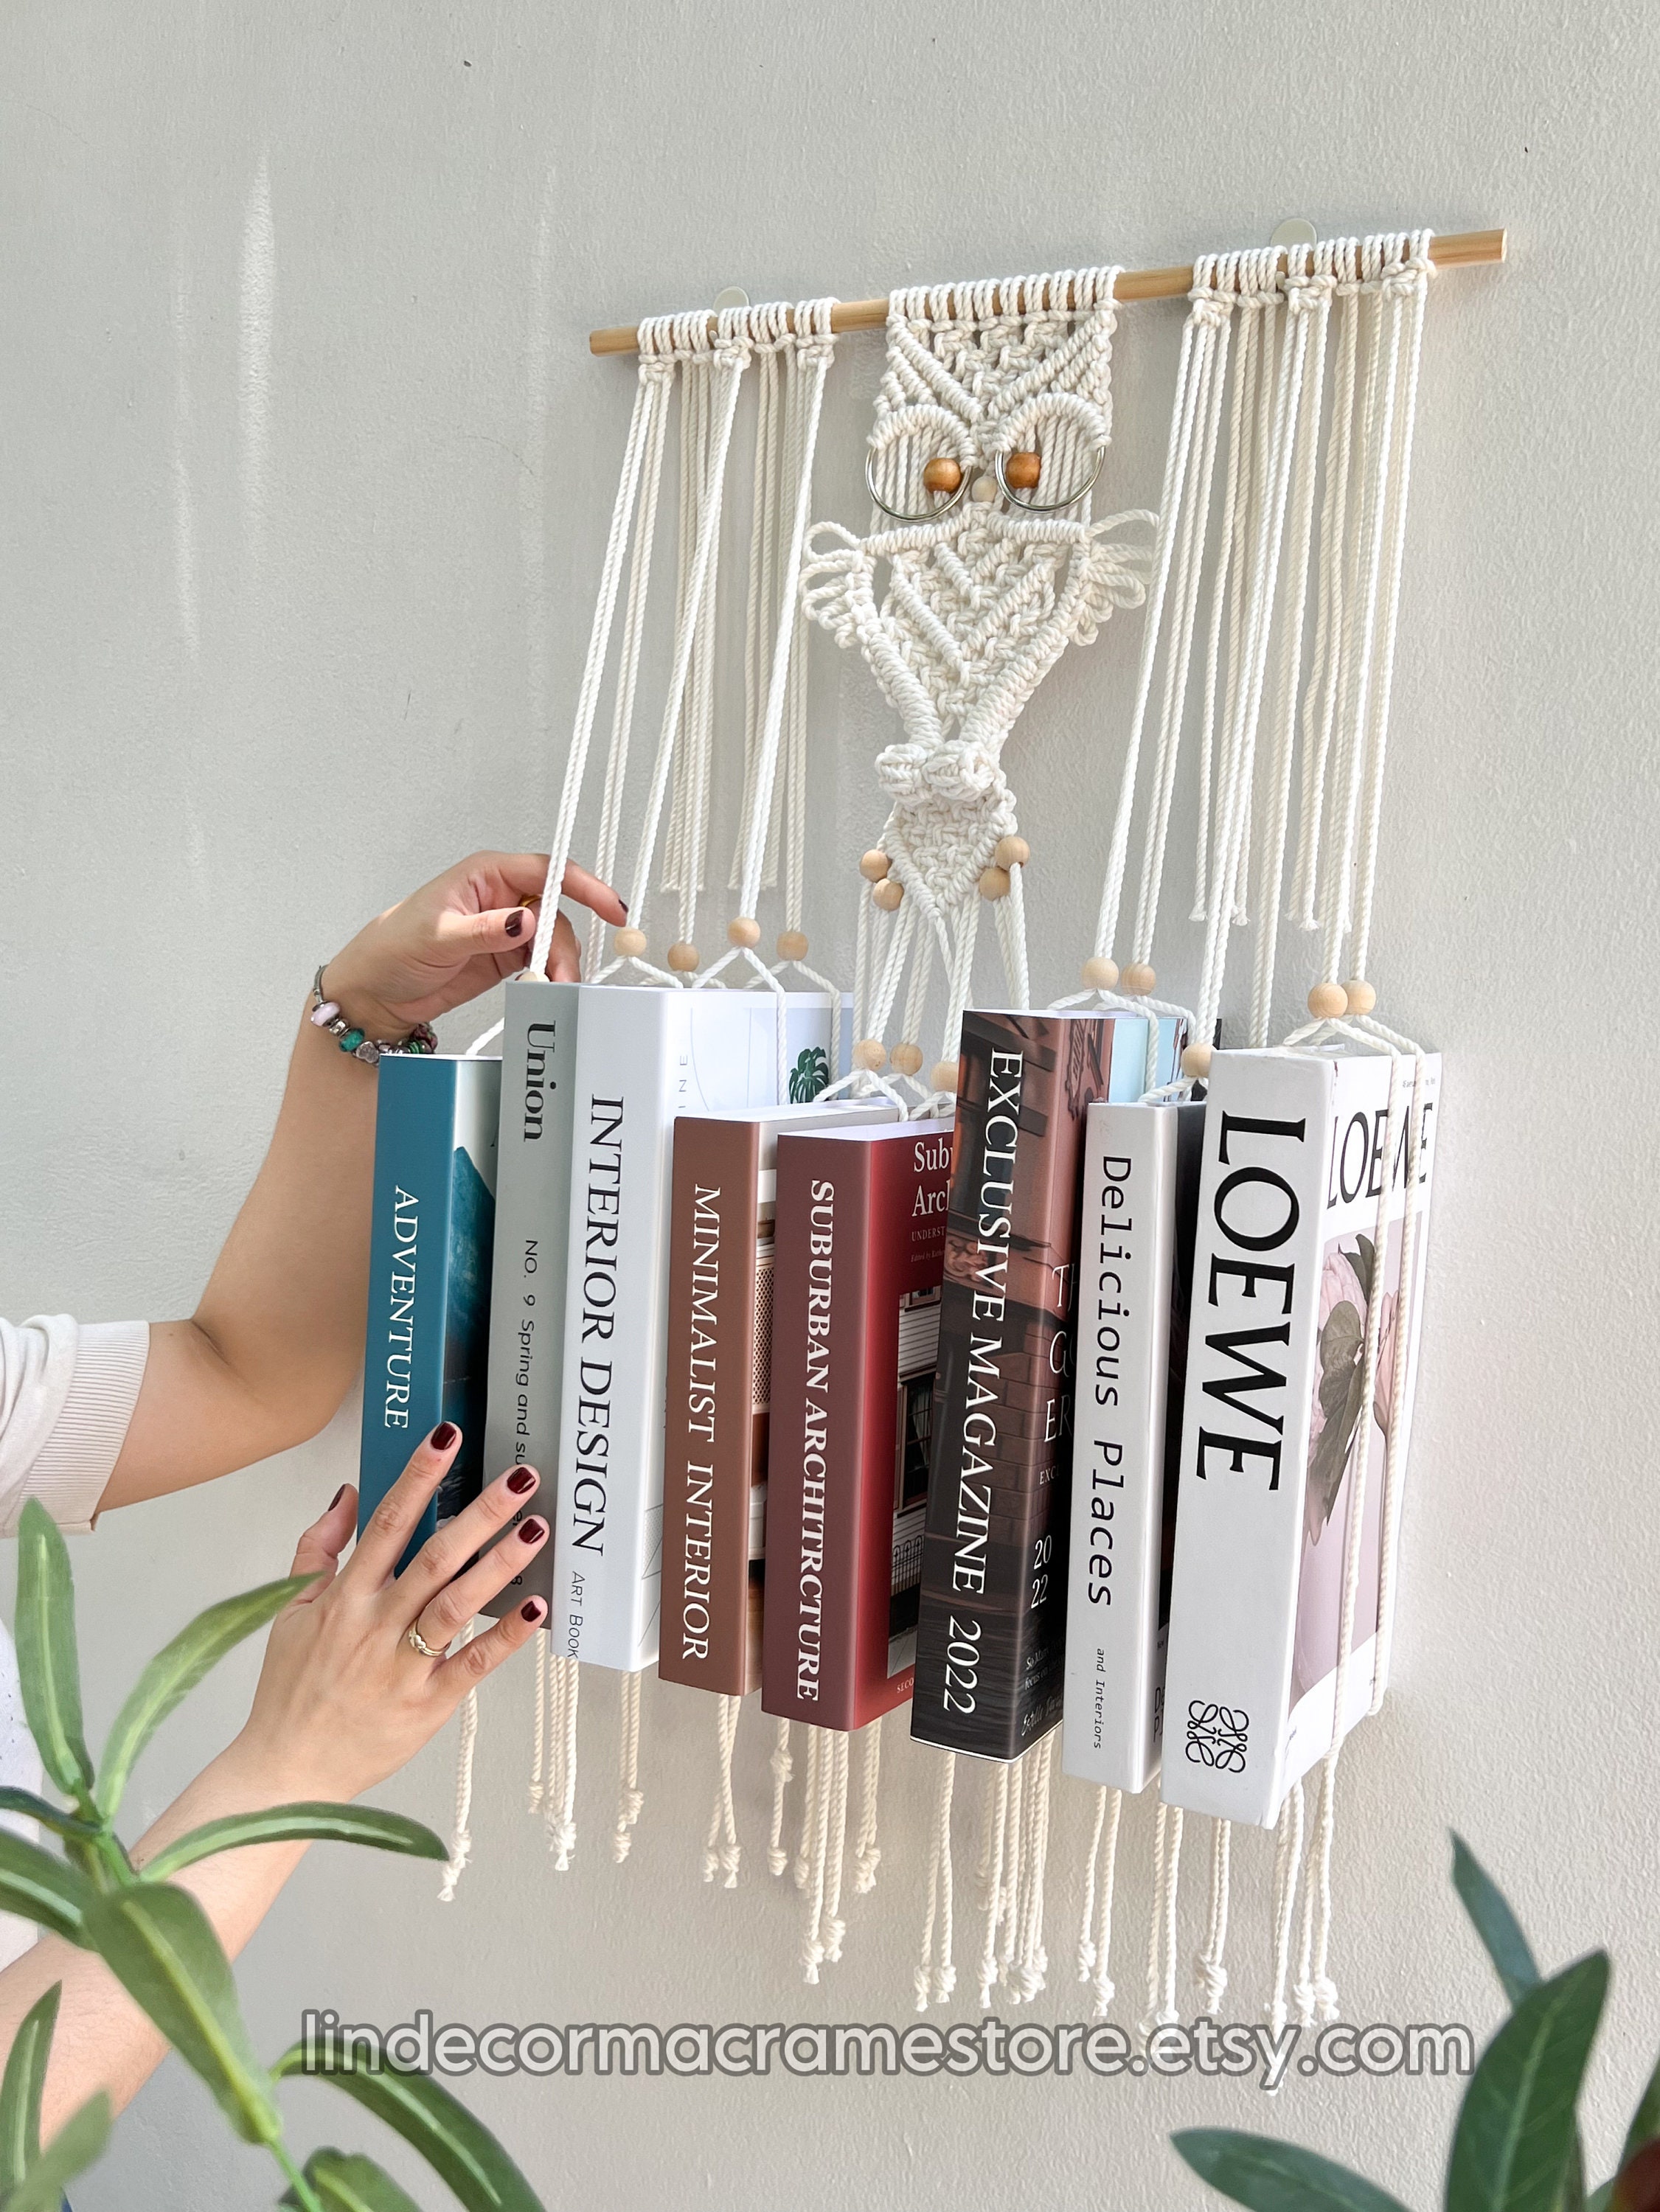 Owl Hanging Bookshelf, Macrame Book Holder, Owl Handmade Book